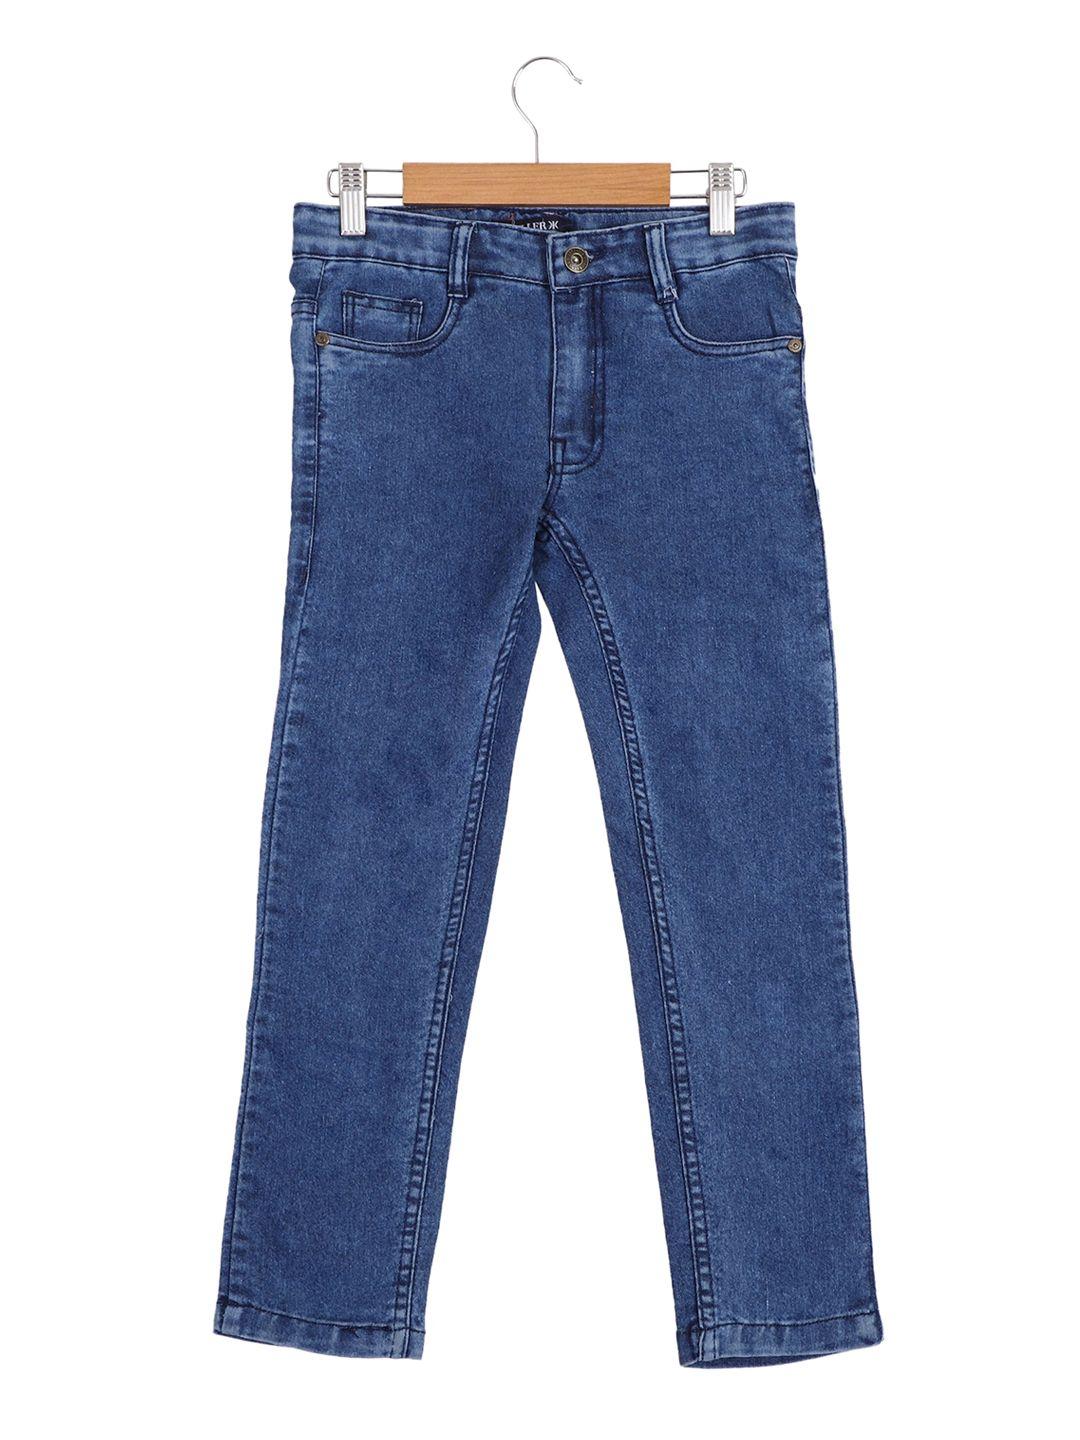 killer-boys-comfort-mid-rise-medium-shade-jeans